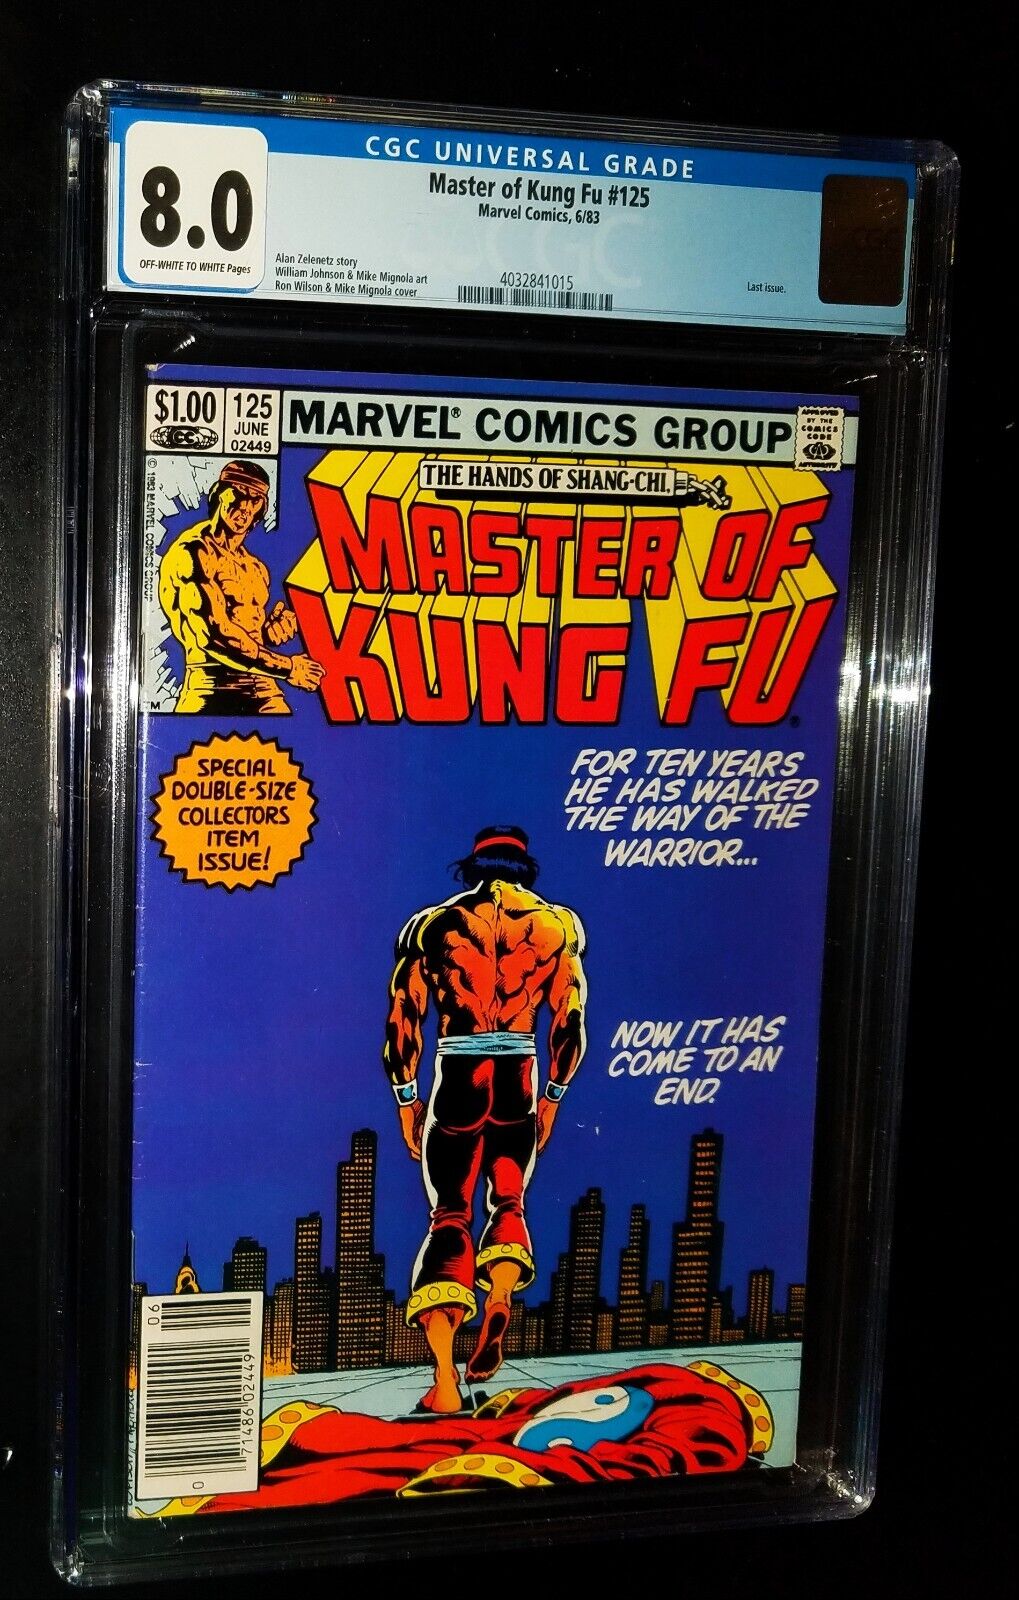 MASTERS OF KUNG FU CGC #125 1983 Marvel Comics CGC 8.0 Very Fine x